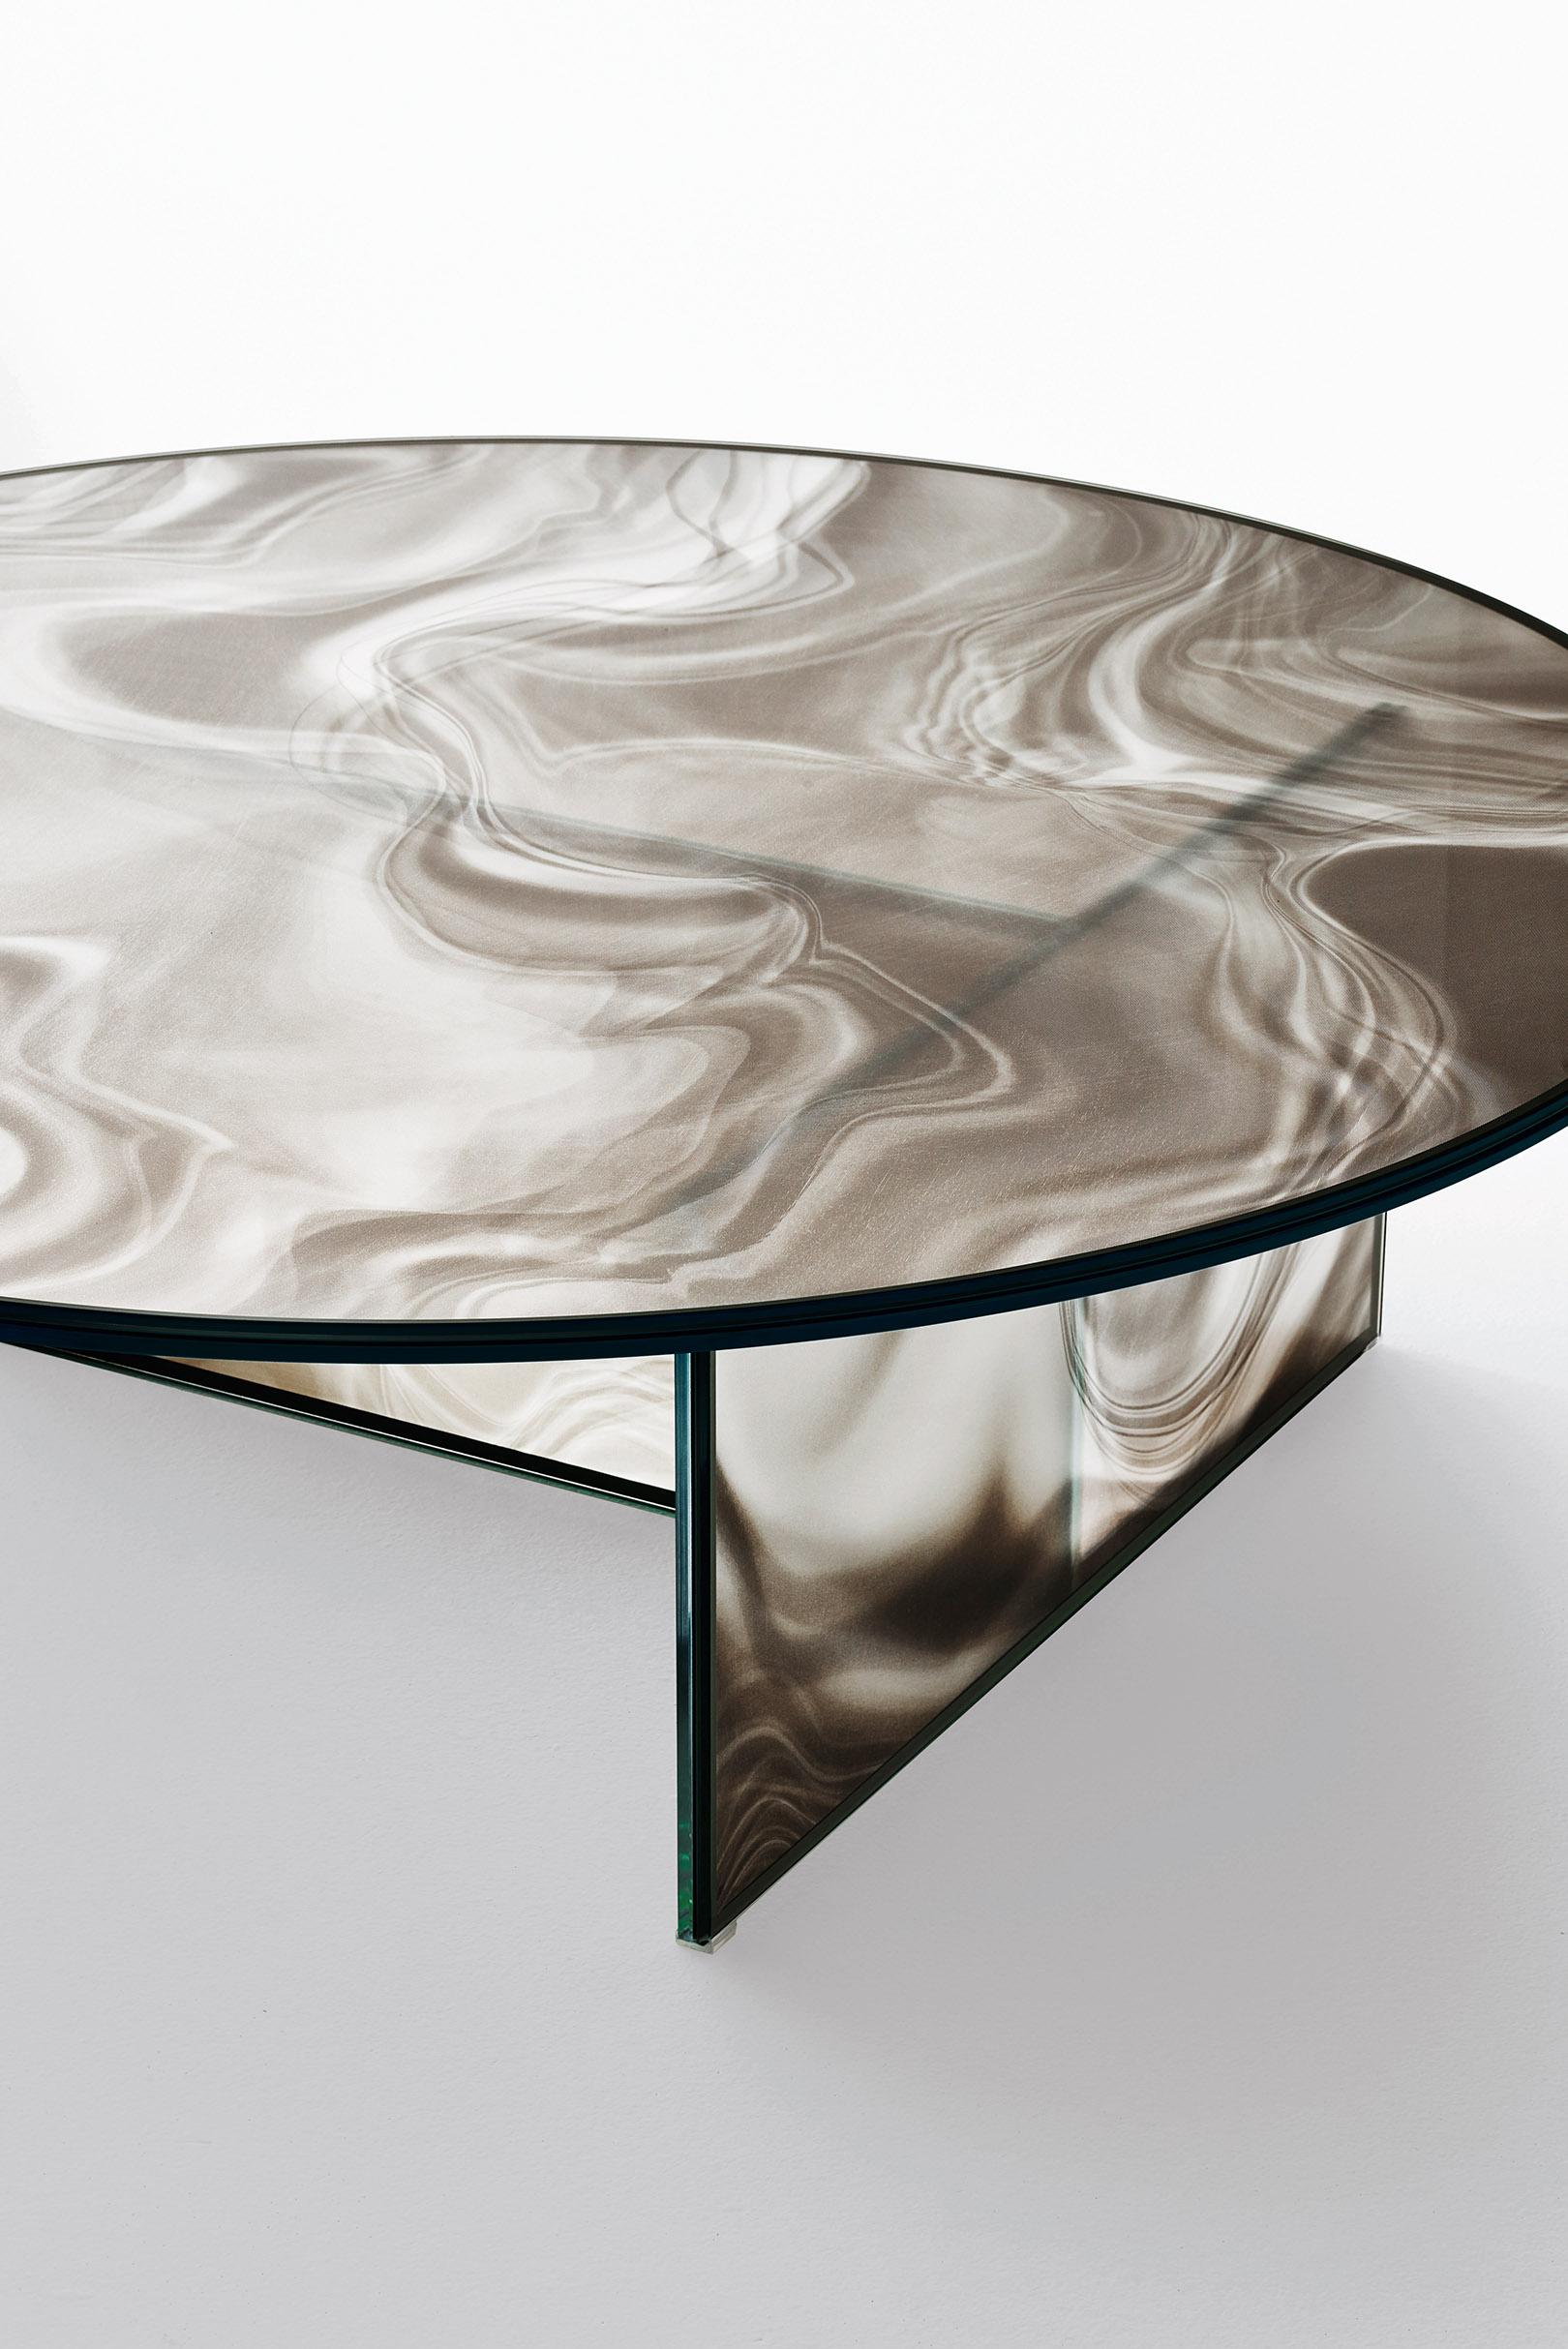 Glass LIQUEFY Coffee Tables Designed by Patricia Urquiola for Glas Italia For Sale